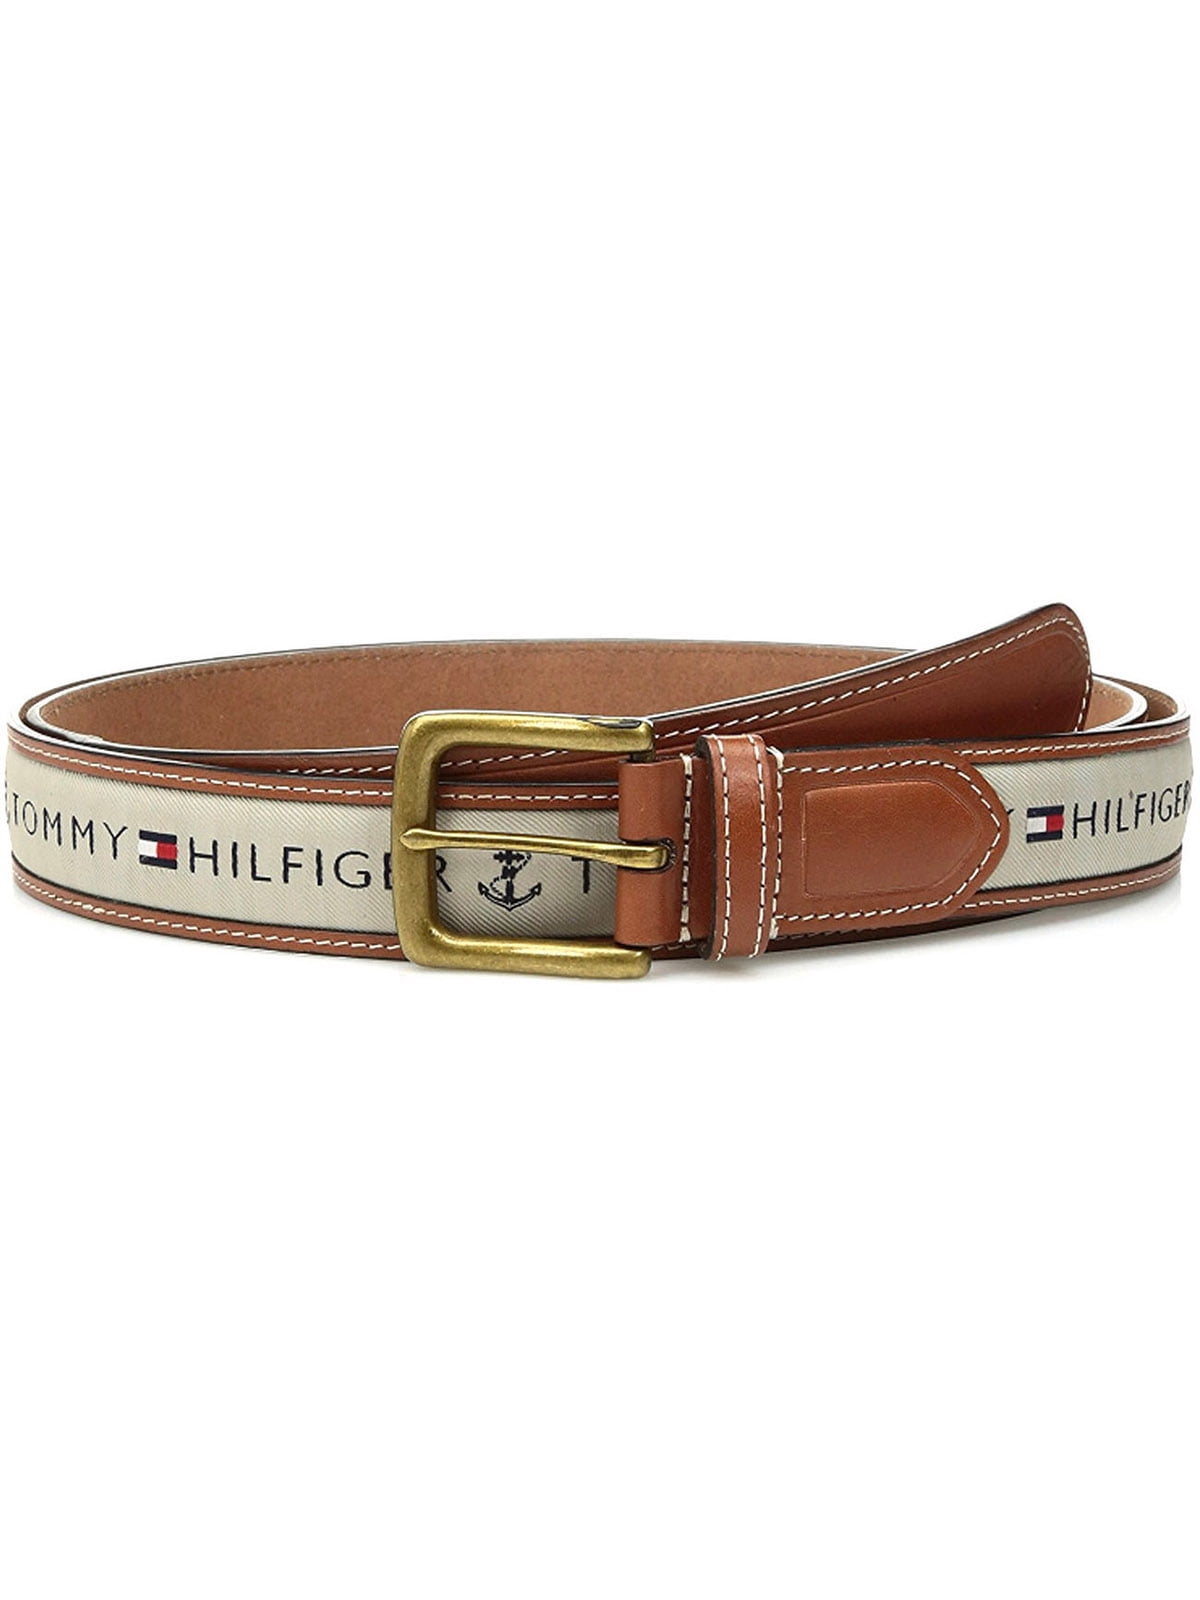 Tommy Hilfiger - Tommy Hilfiger Men's Ribbon Inlay Belt - Walmart.com ...